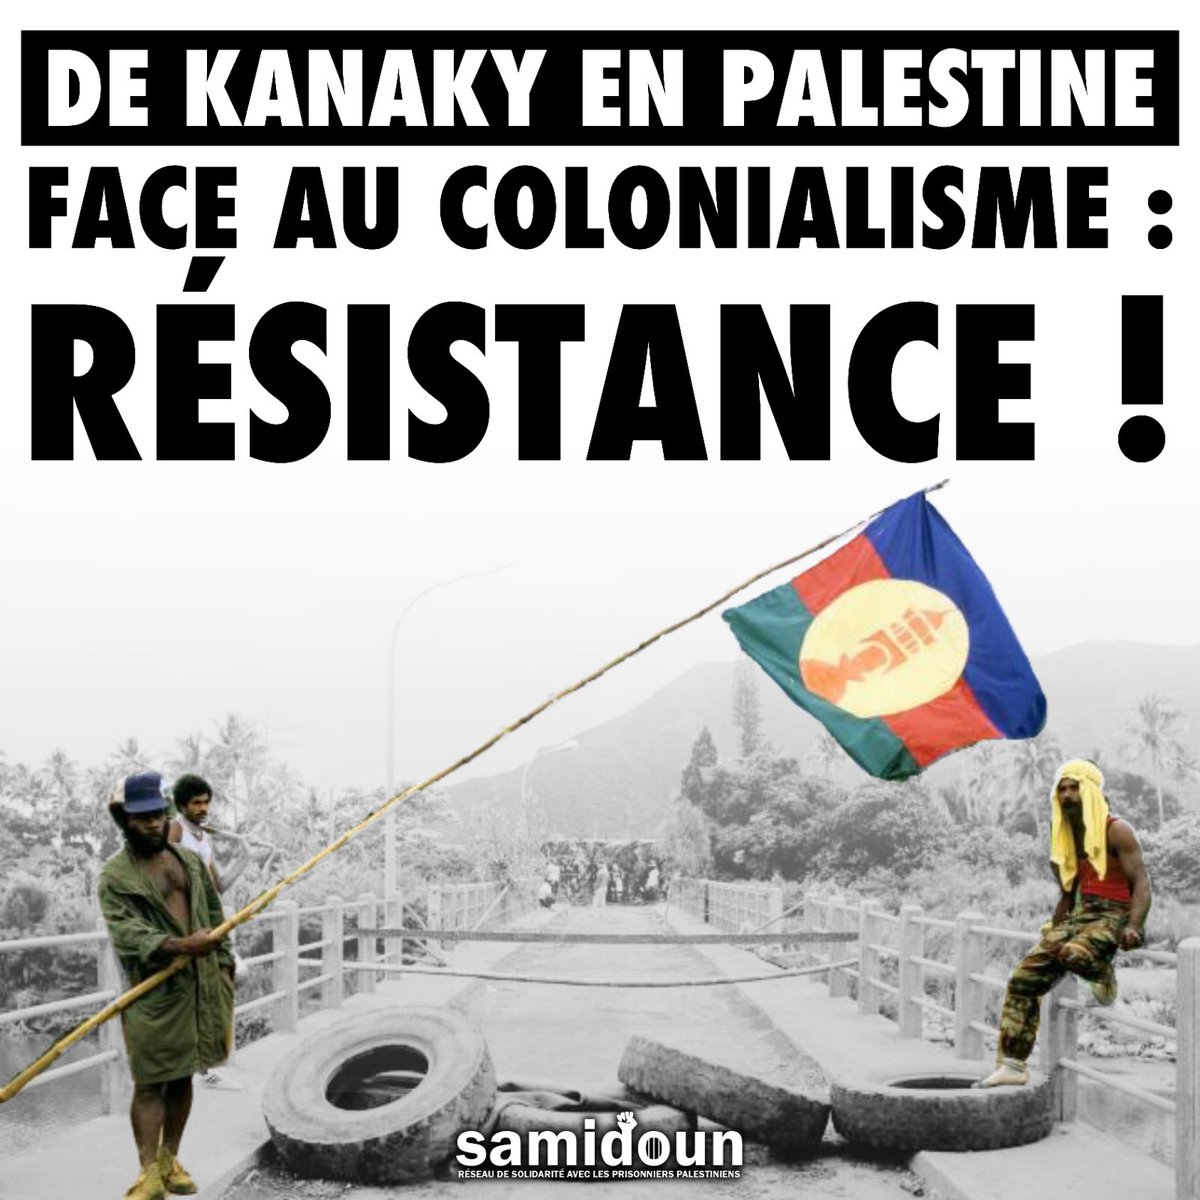 🇳🇨🇵🇸 De Kanaky en Palestine, face au colonialisme : résistance ! 

#Kanaky #KanakyResistance